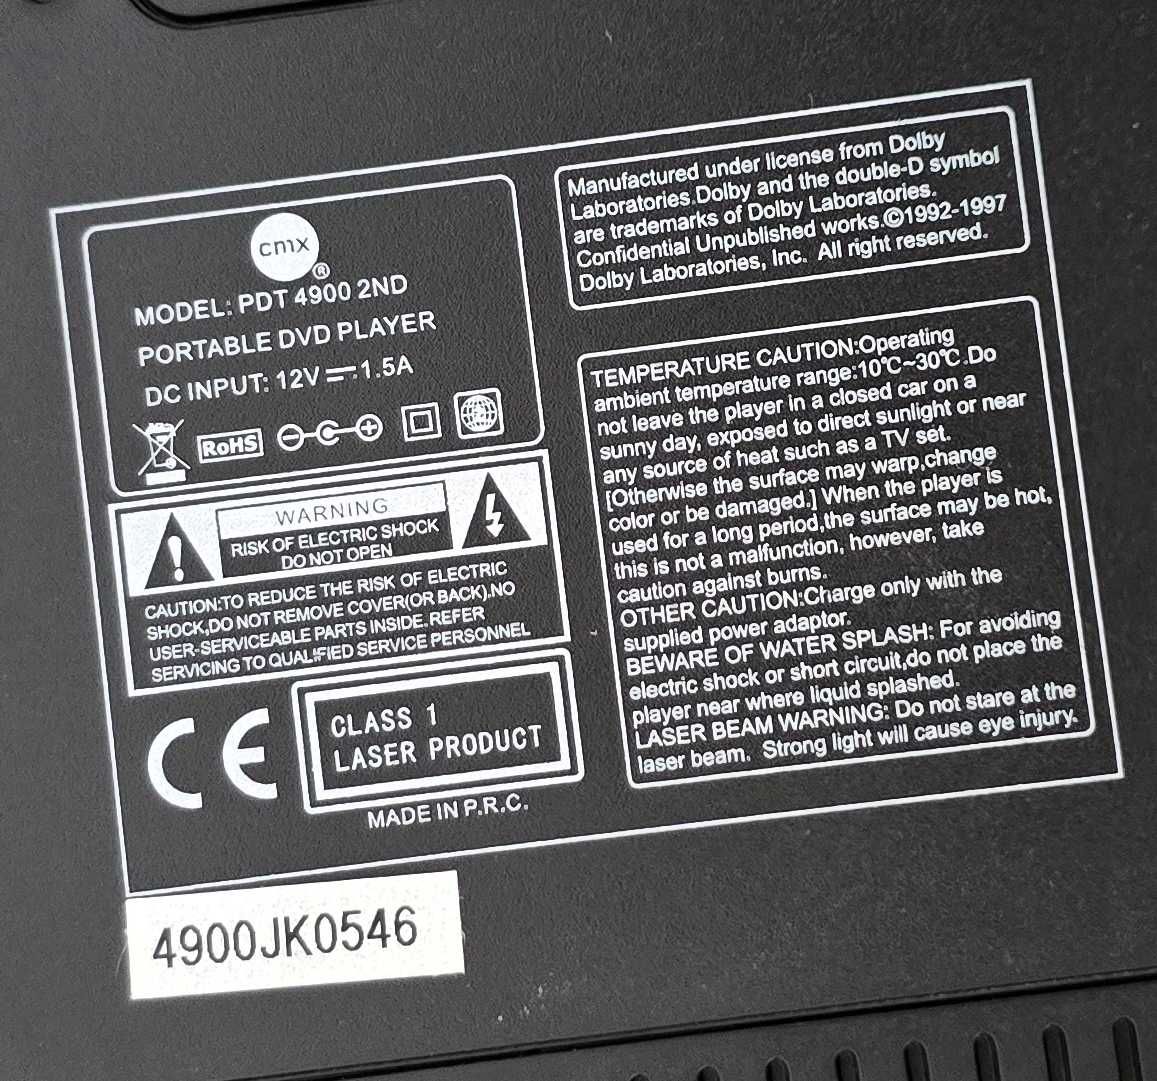 Dvd player portabil Cmx PDT 4900 - 9 inch